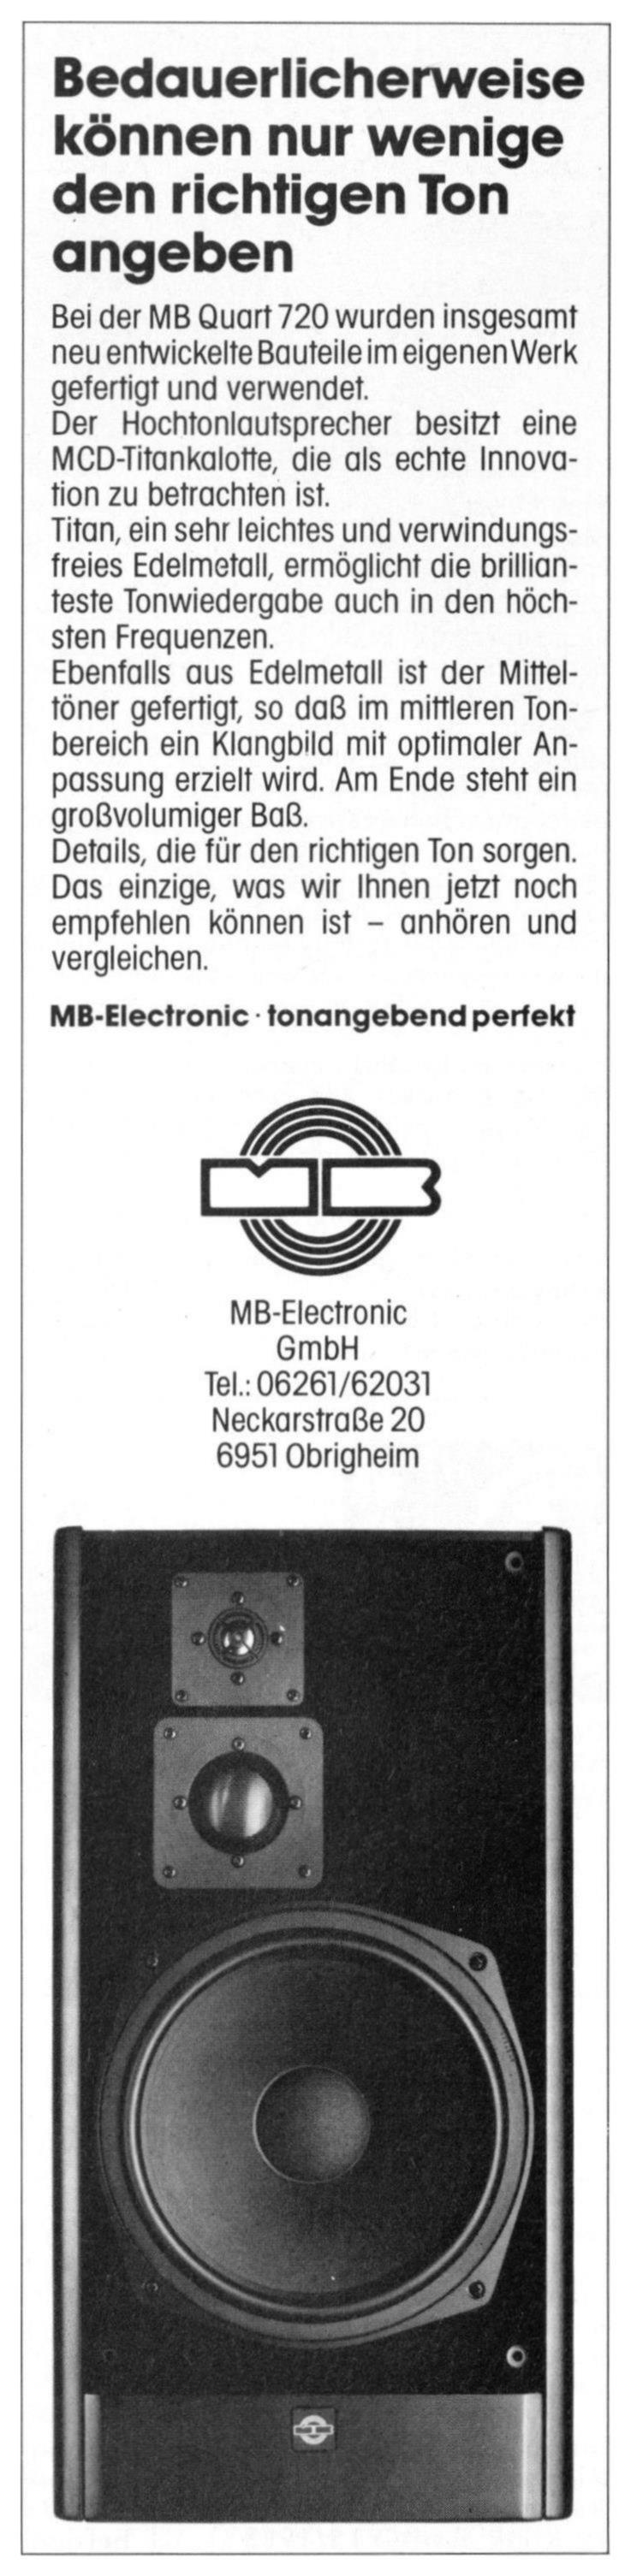 MB 1984 01.jpg